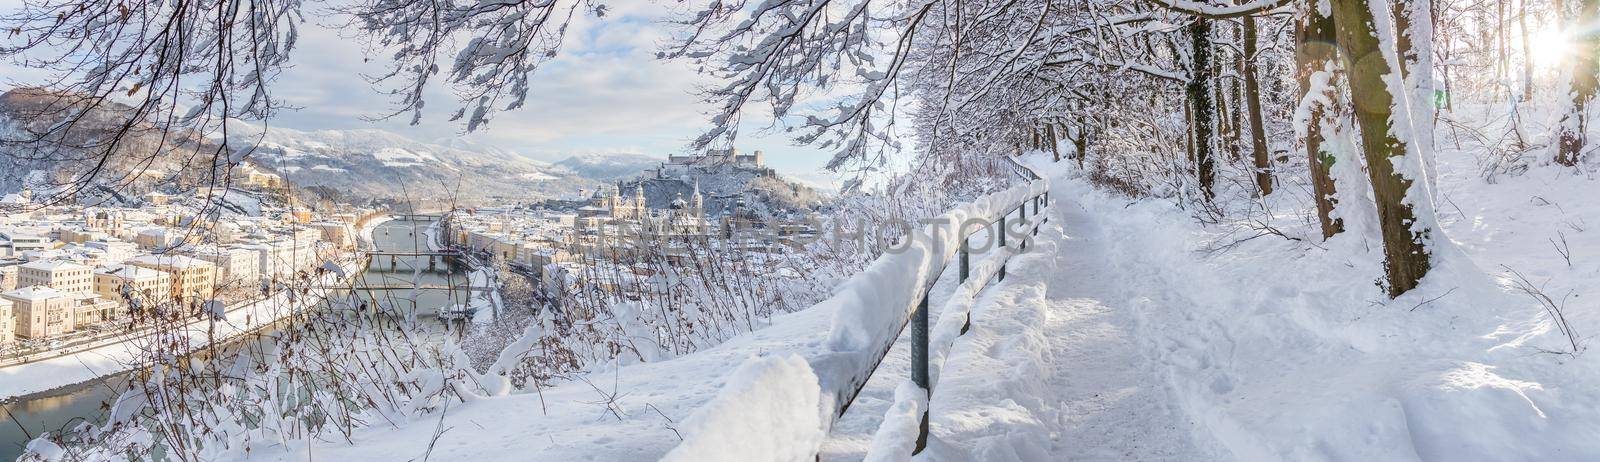 Walking promenade in Salzburg, snowy winter landscape by Daxenbichler